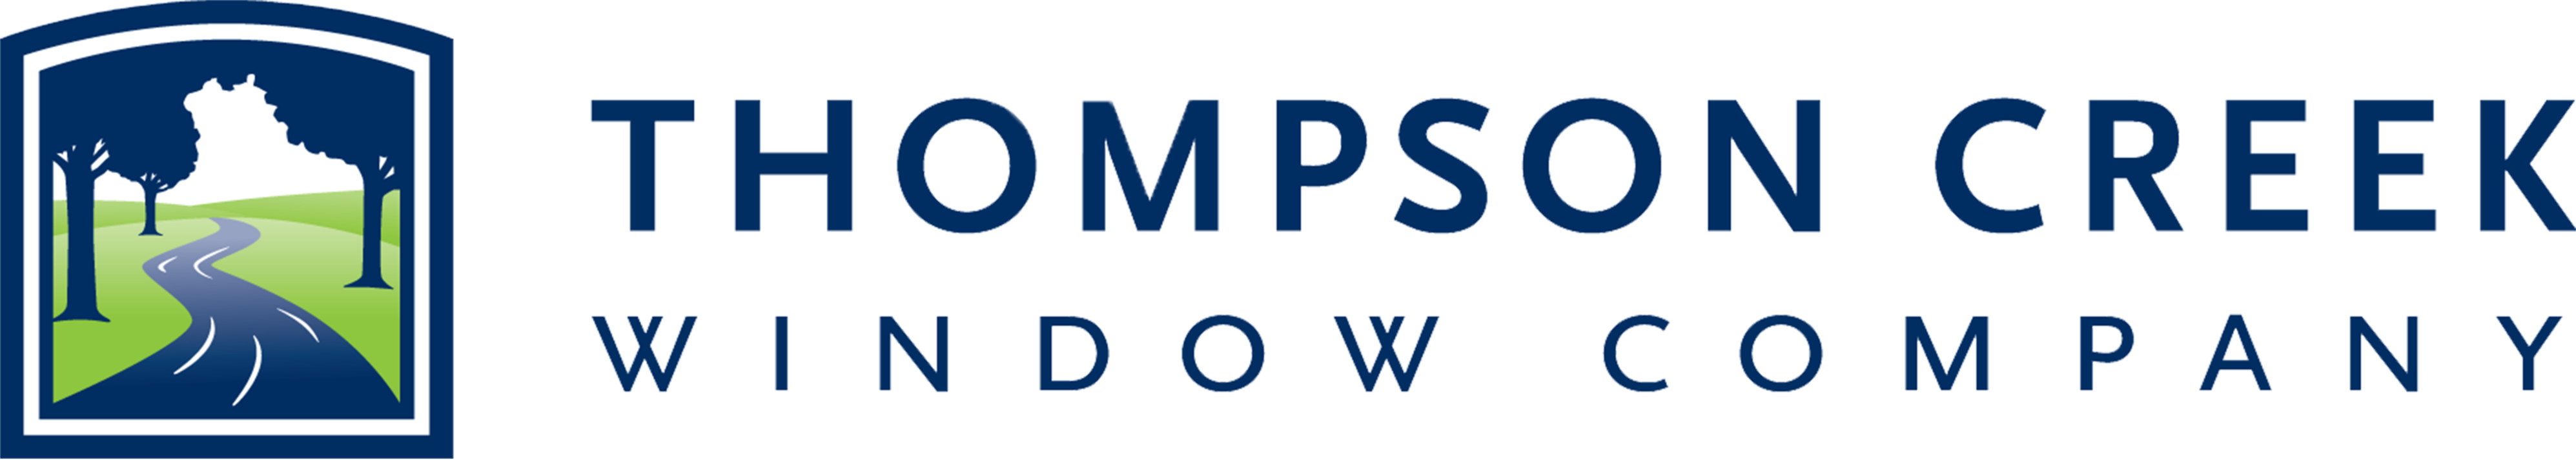 Thompson Creek Window Company Company Logo